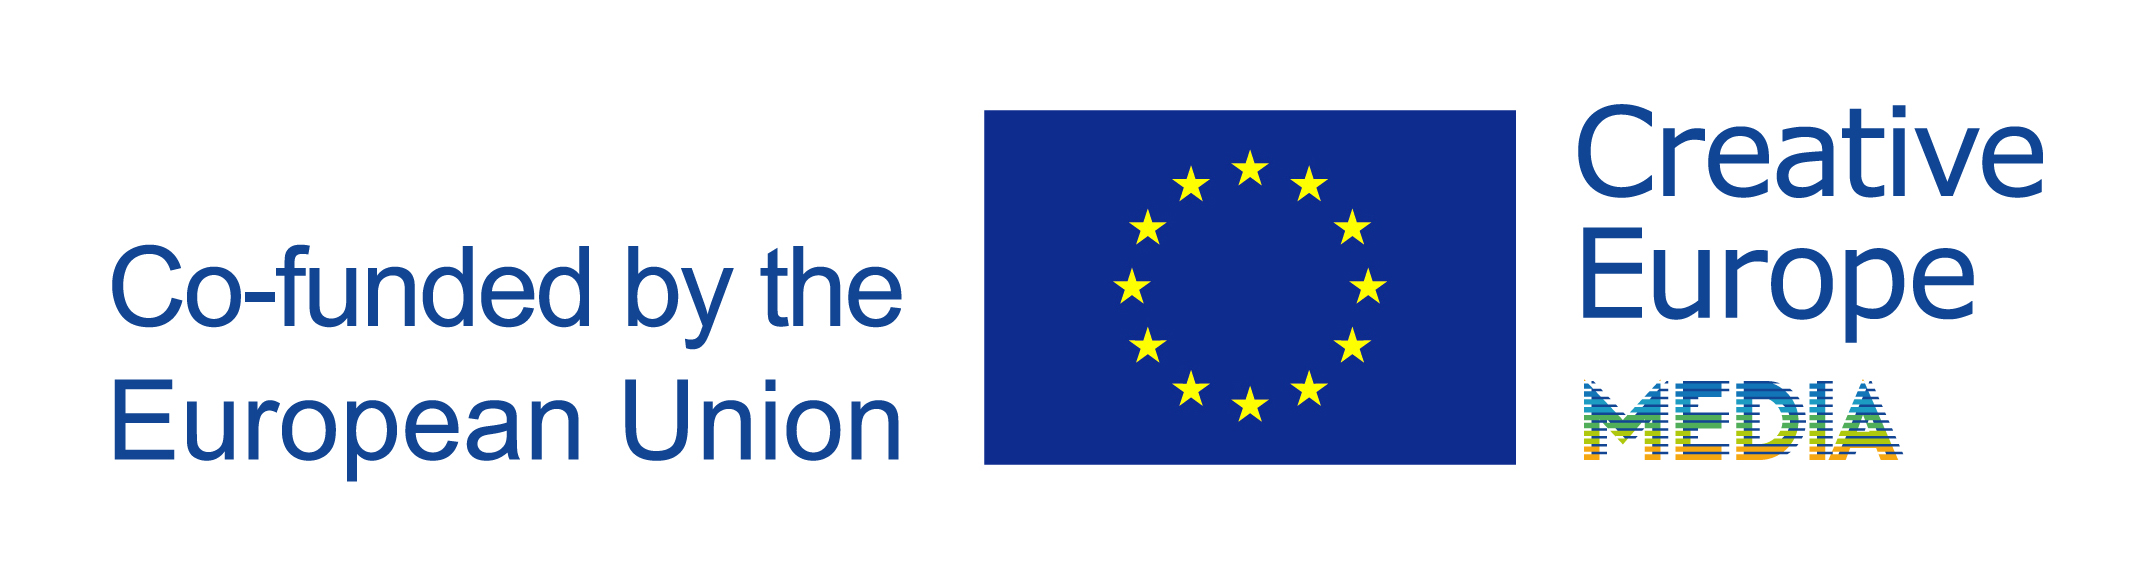 eu flag creative europe media co funded en rgb 